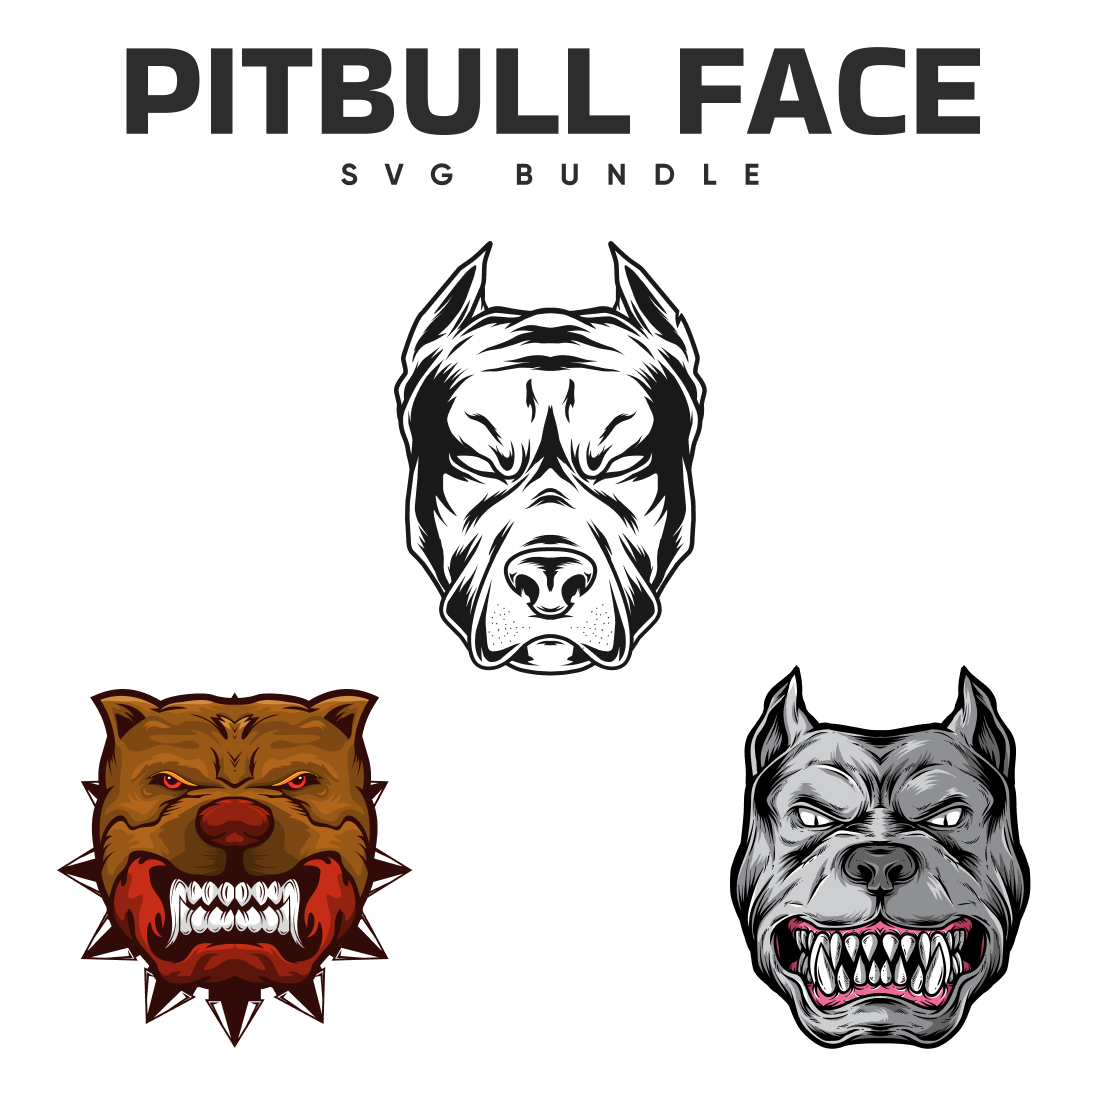 The pitbull face svg bundle.